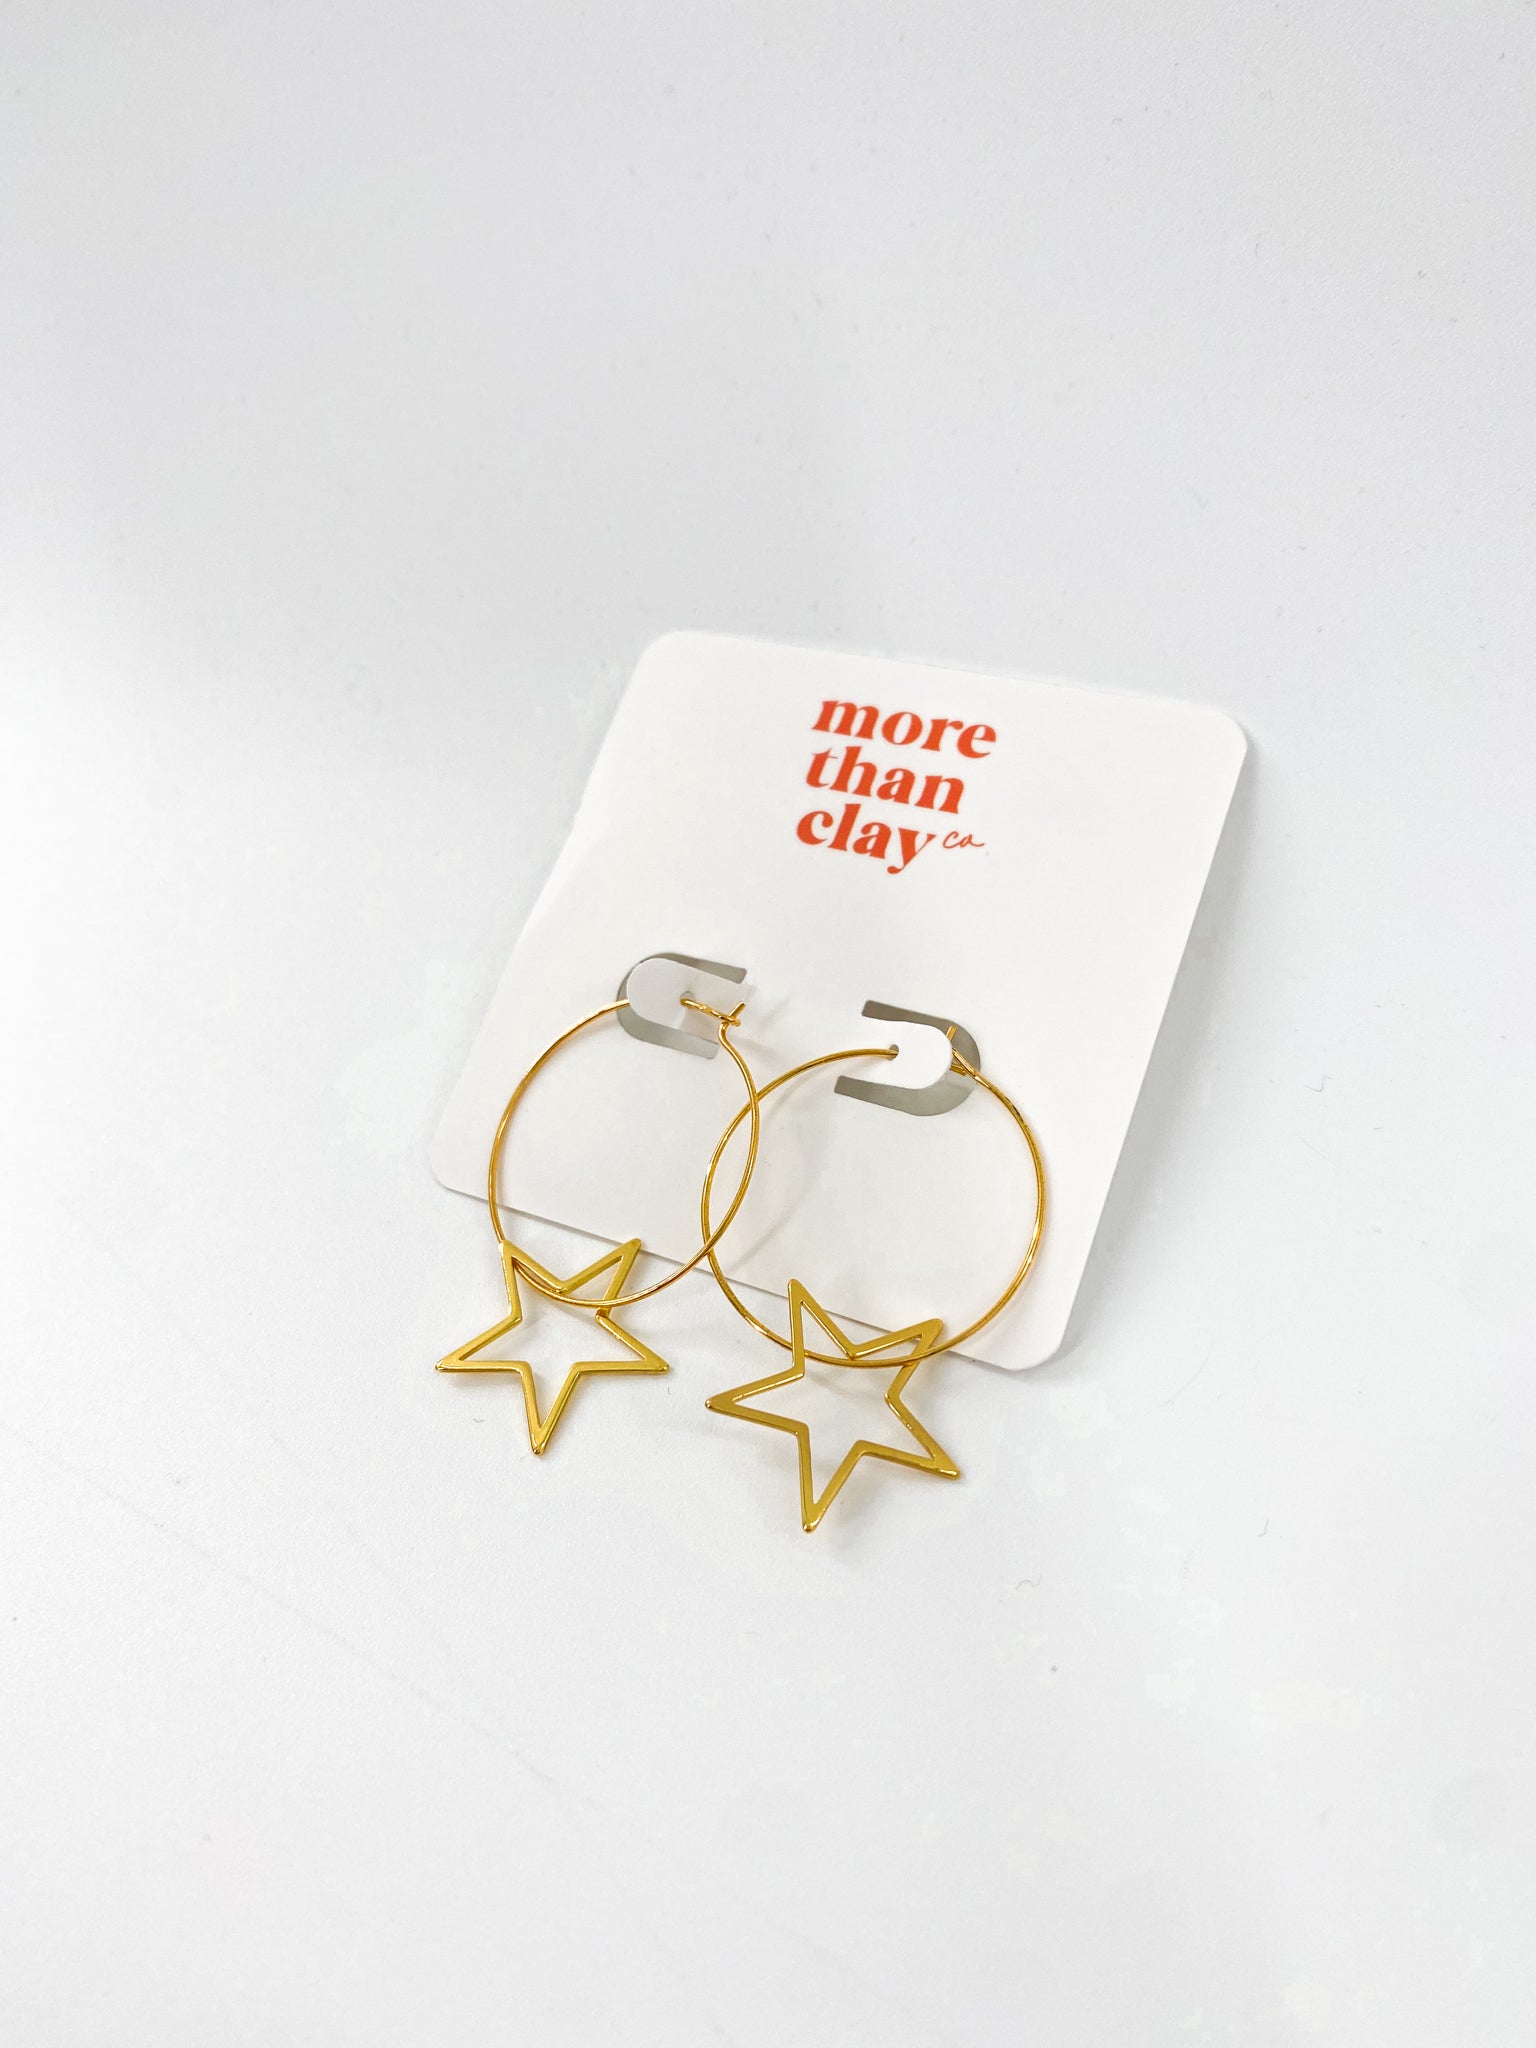 the gold star earrings